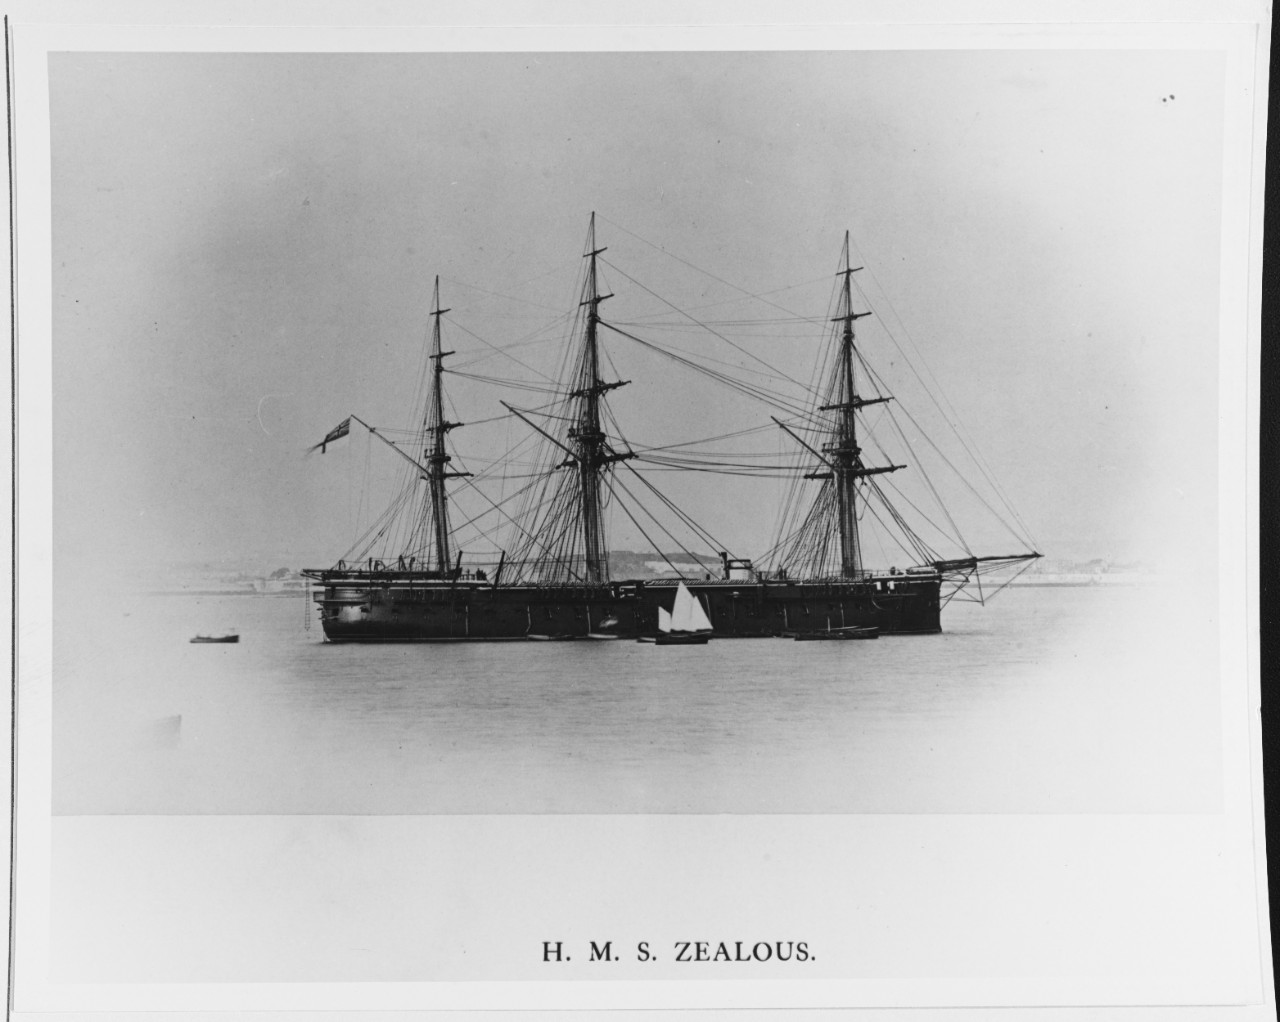 HMS ZEALOUS (BRITISH BATTLESHIP, 1864)